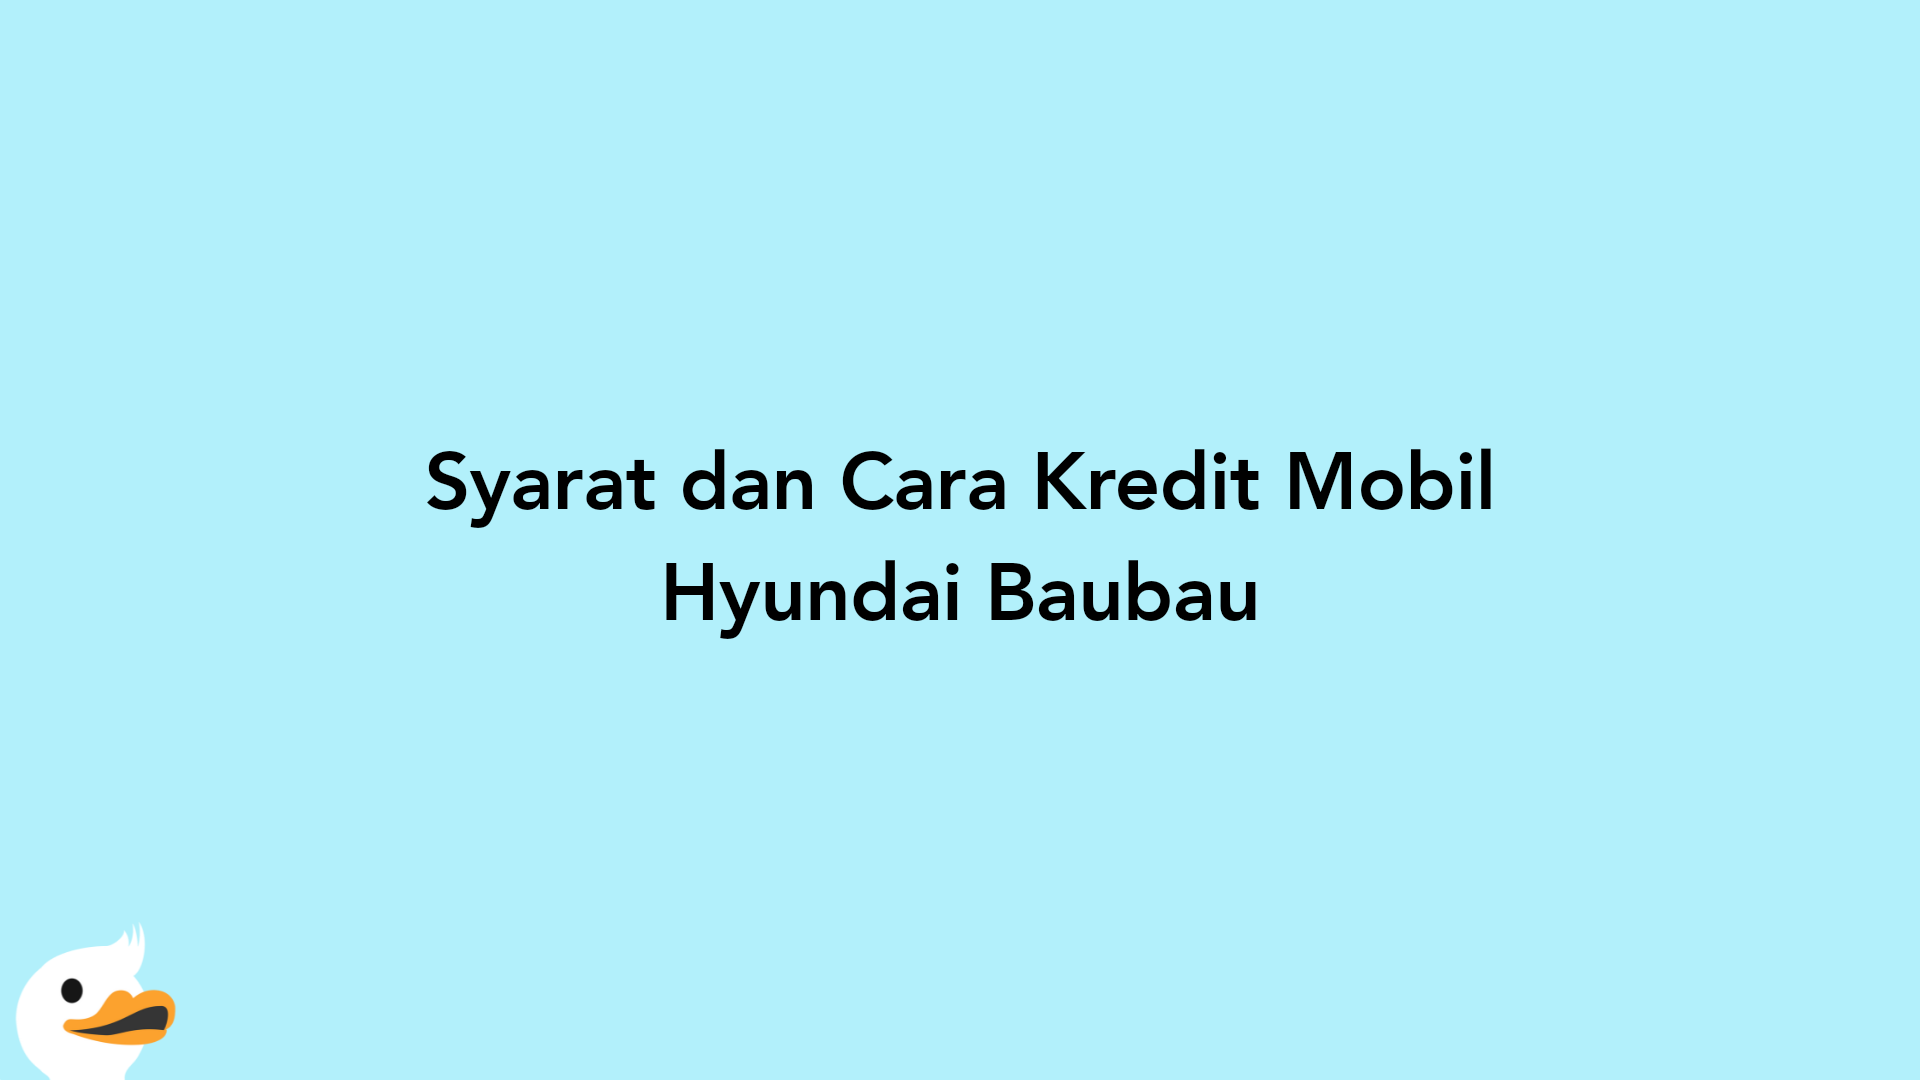 Syarat dan Cara Kredit Mobil Hyundai Baubau